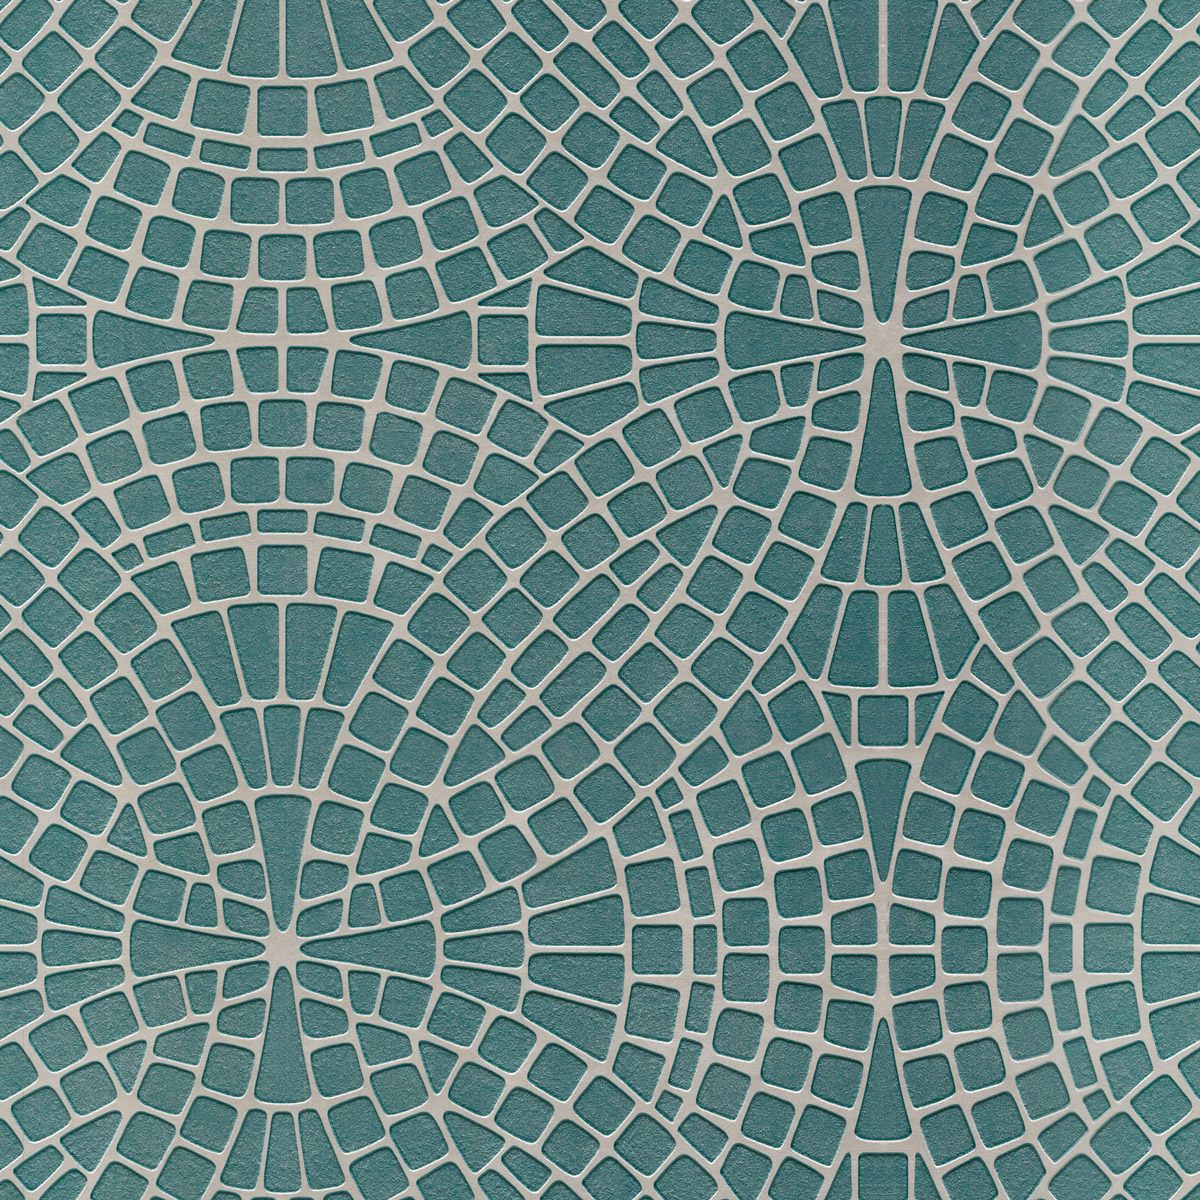 Fine Decor ceramica mosaic teal blue wallpaper